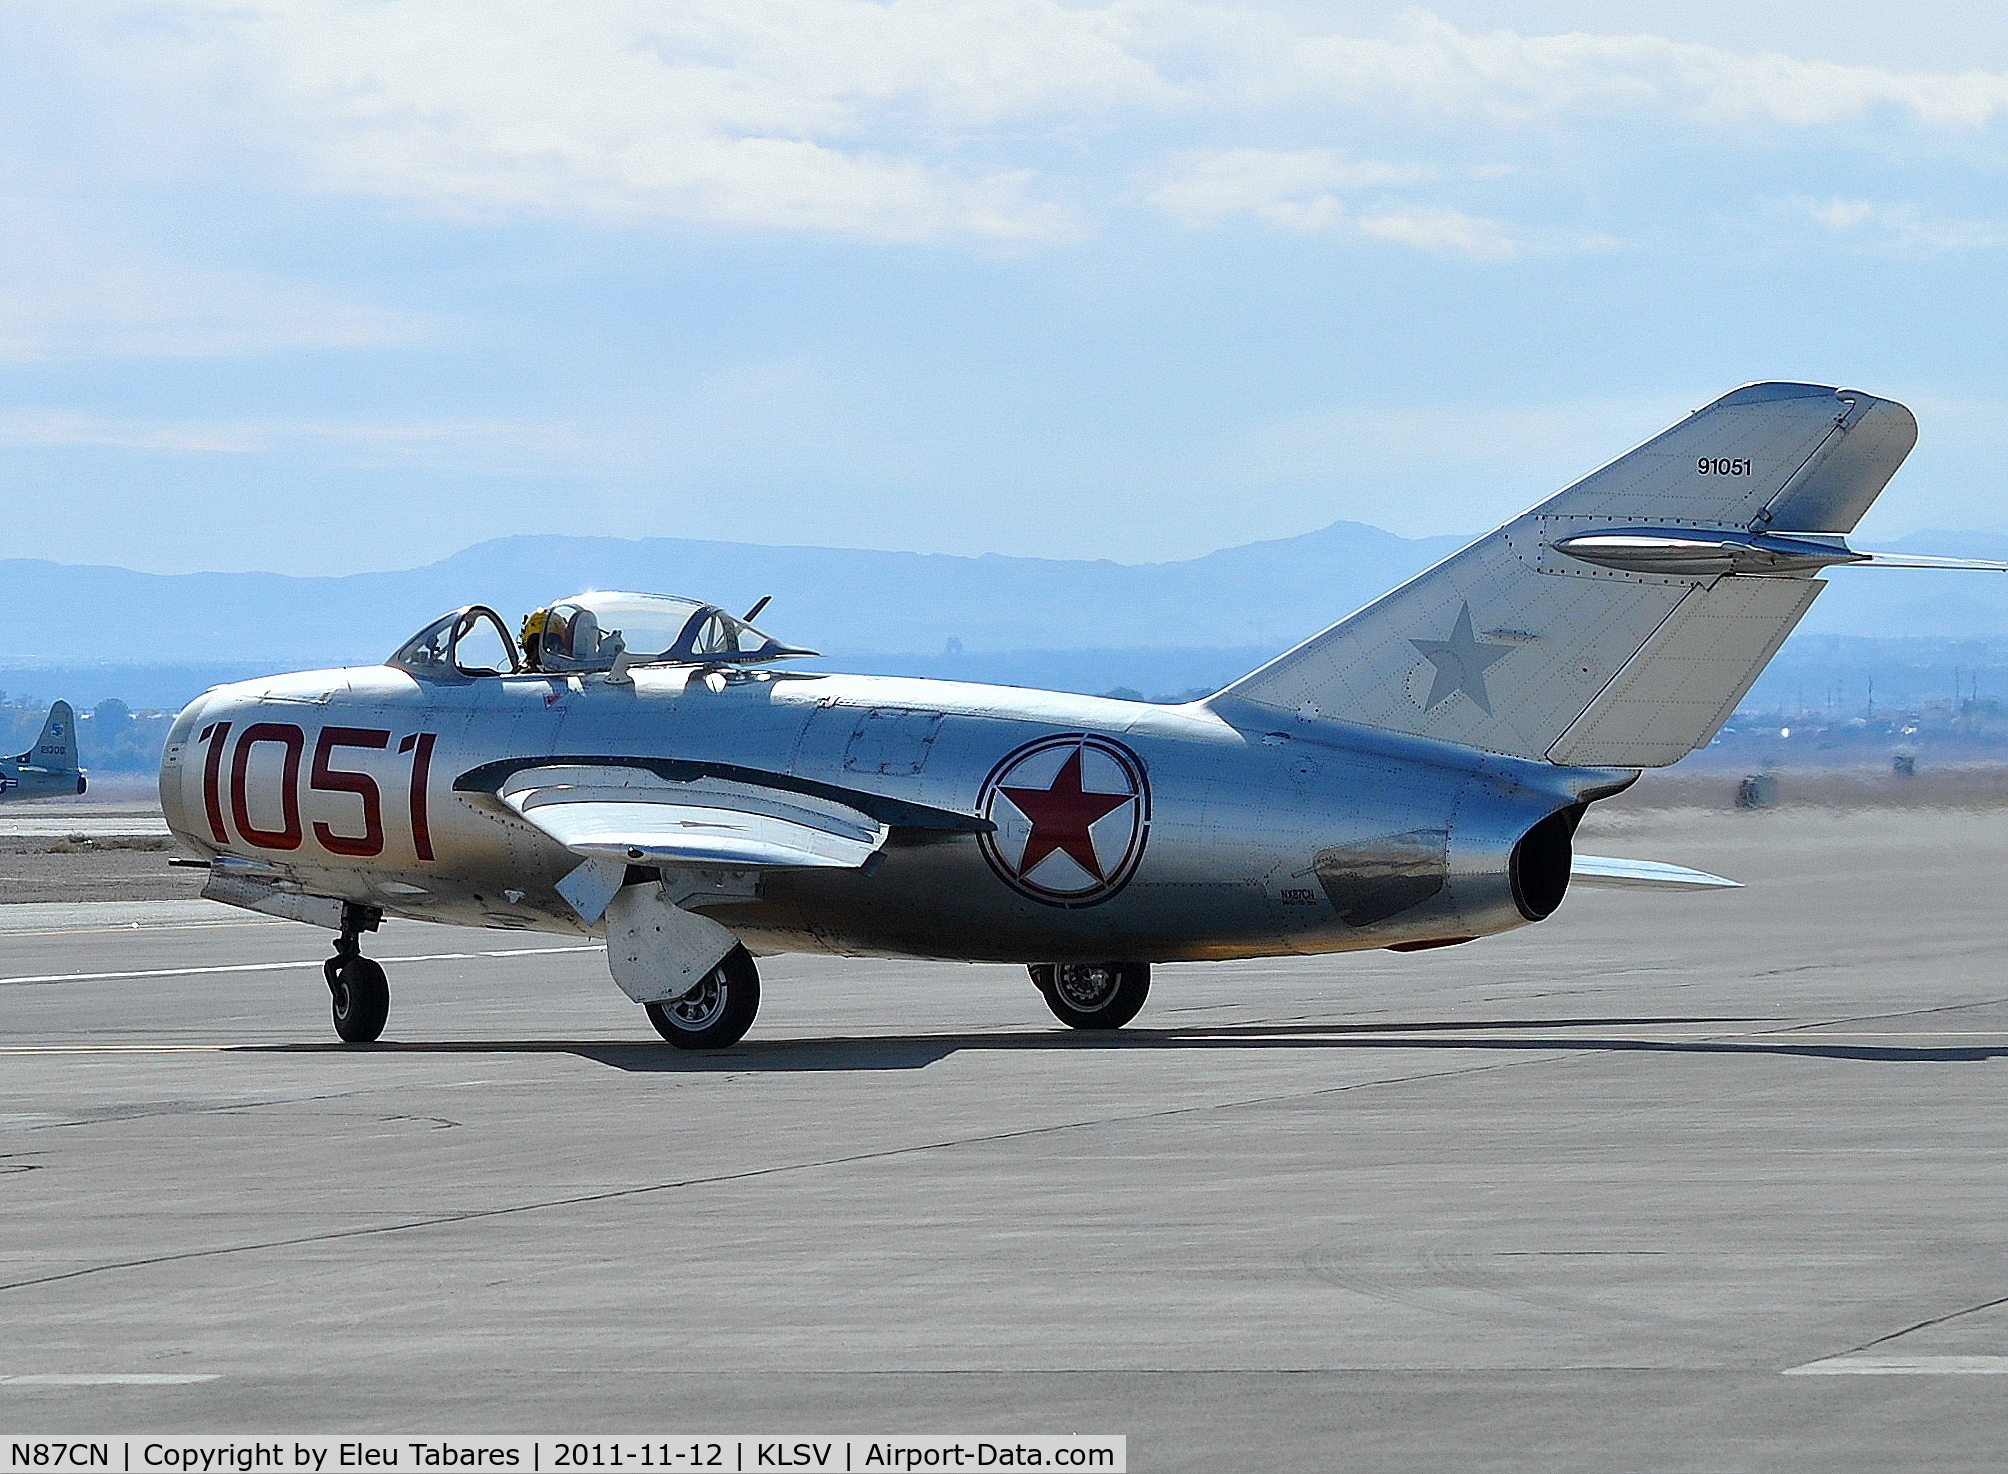 N87CN, Mikoyan-Gurevich MiG-15 C/N 910-51, Taken during Aviation Nation 2011 at Nellis Air Force Base, Nevada.